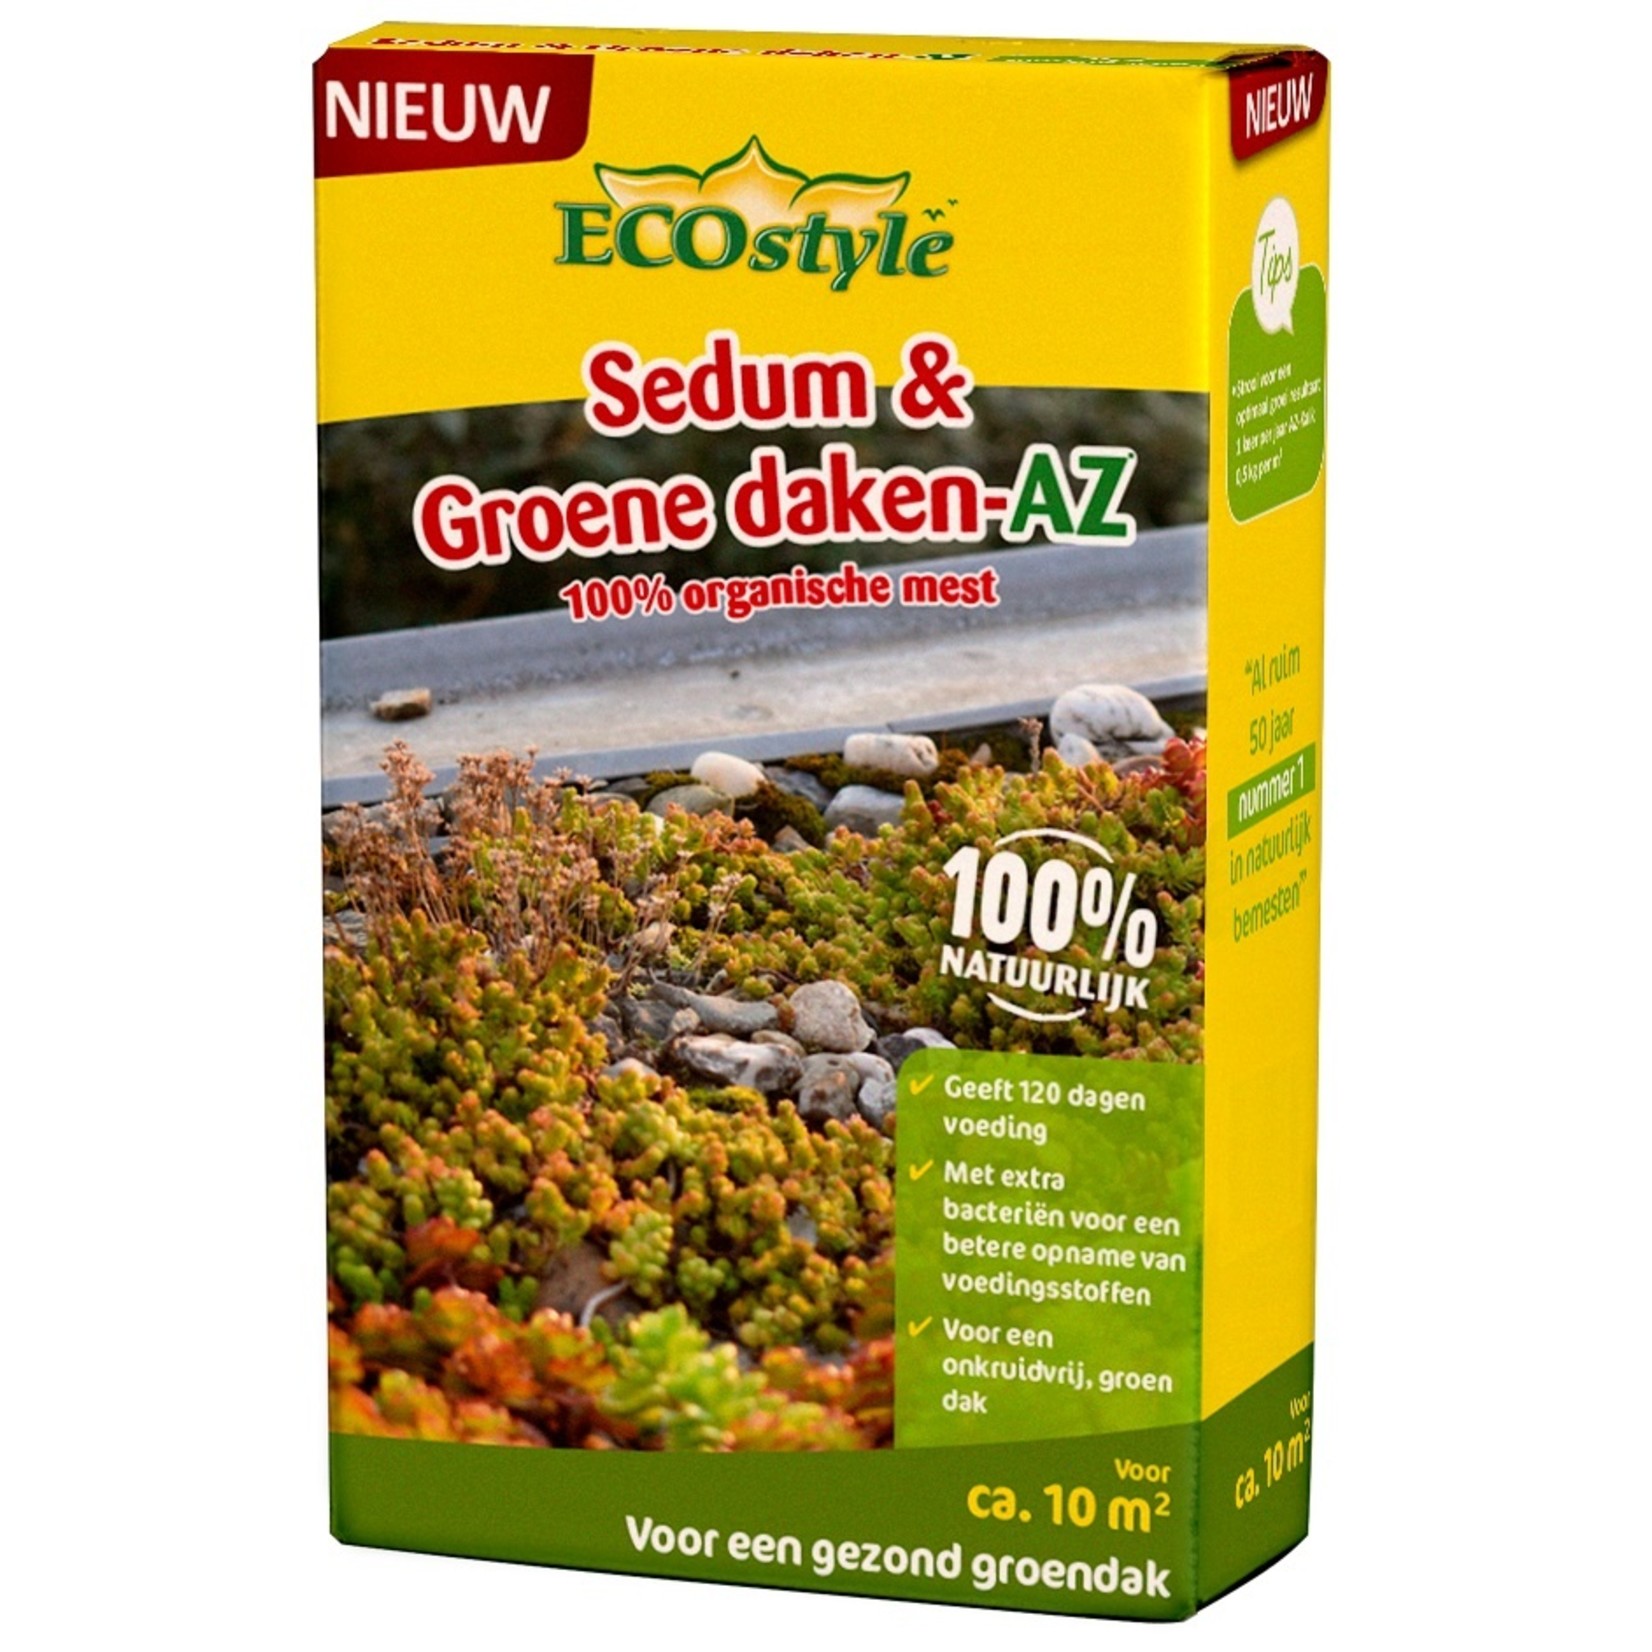 ECOstyle Sedum & Groene daken-AZ meststof 800 gram (10 m²)